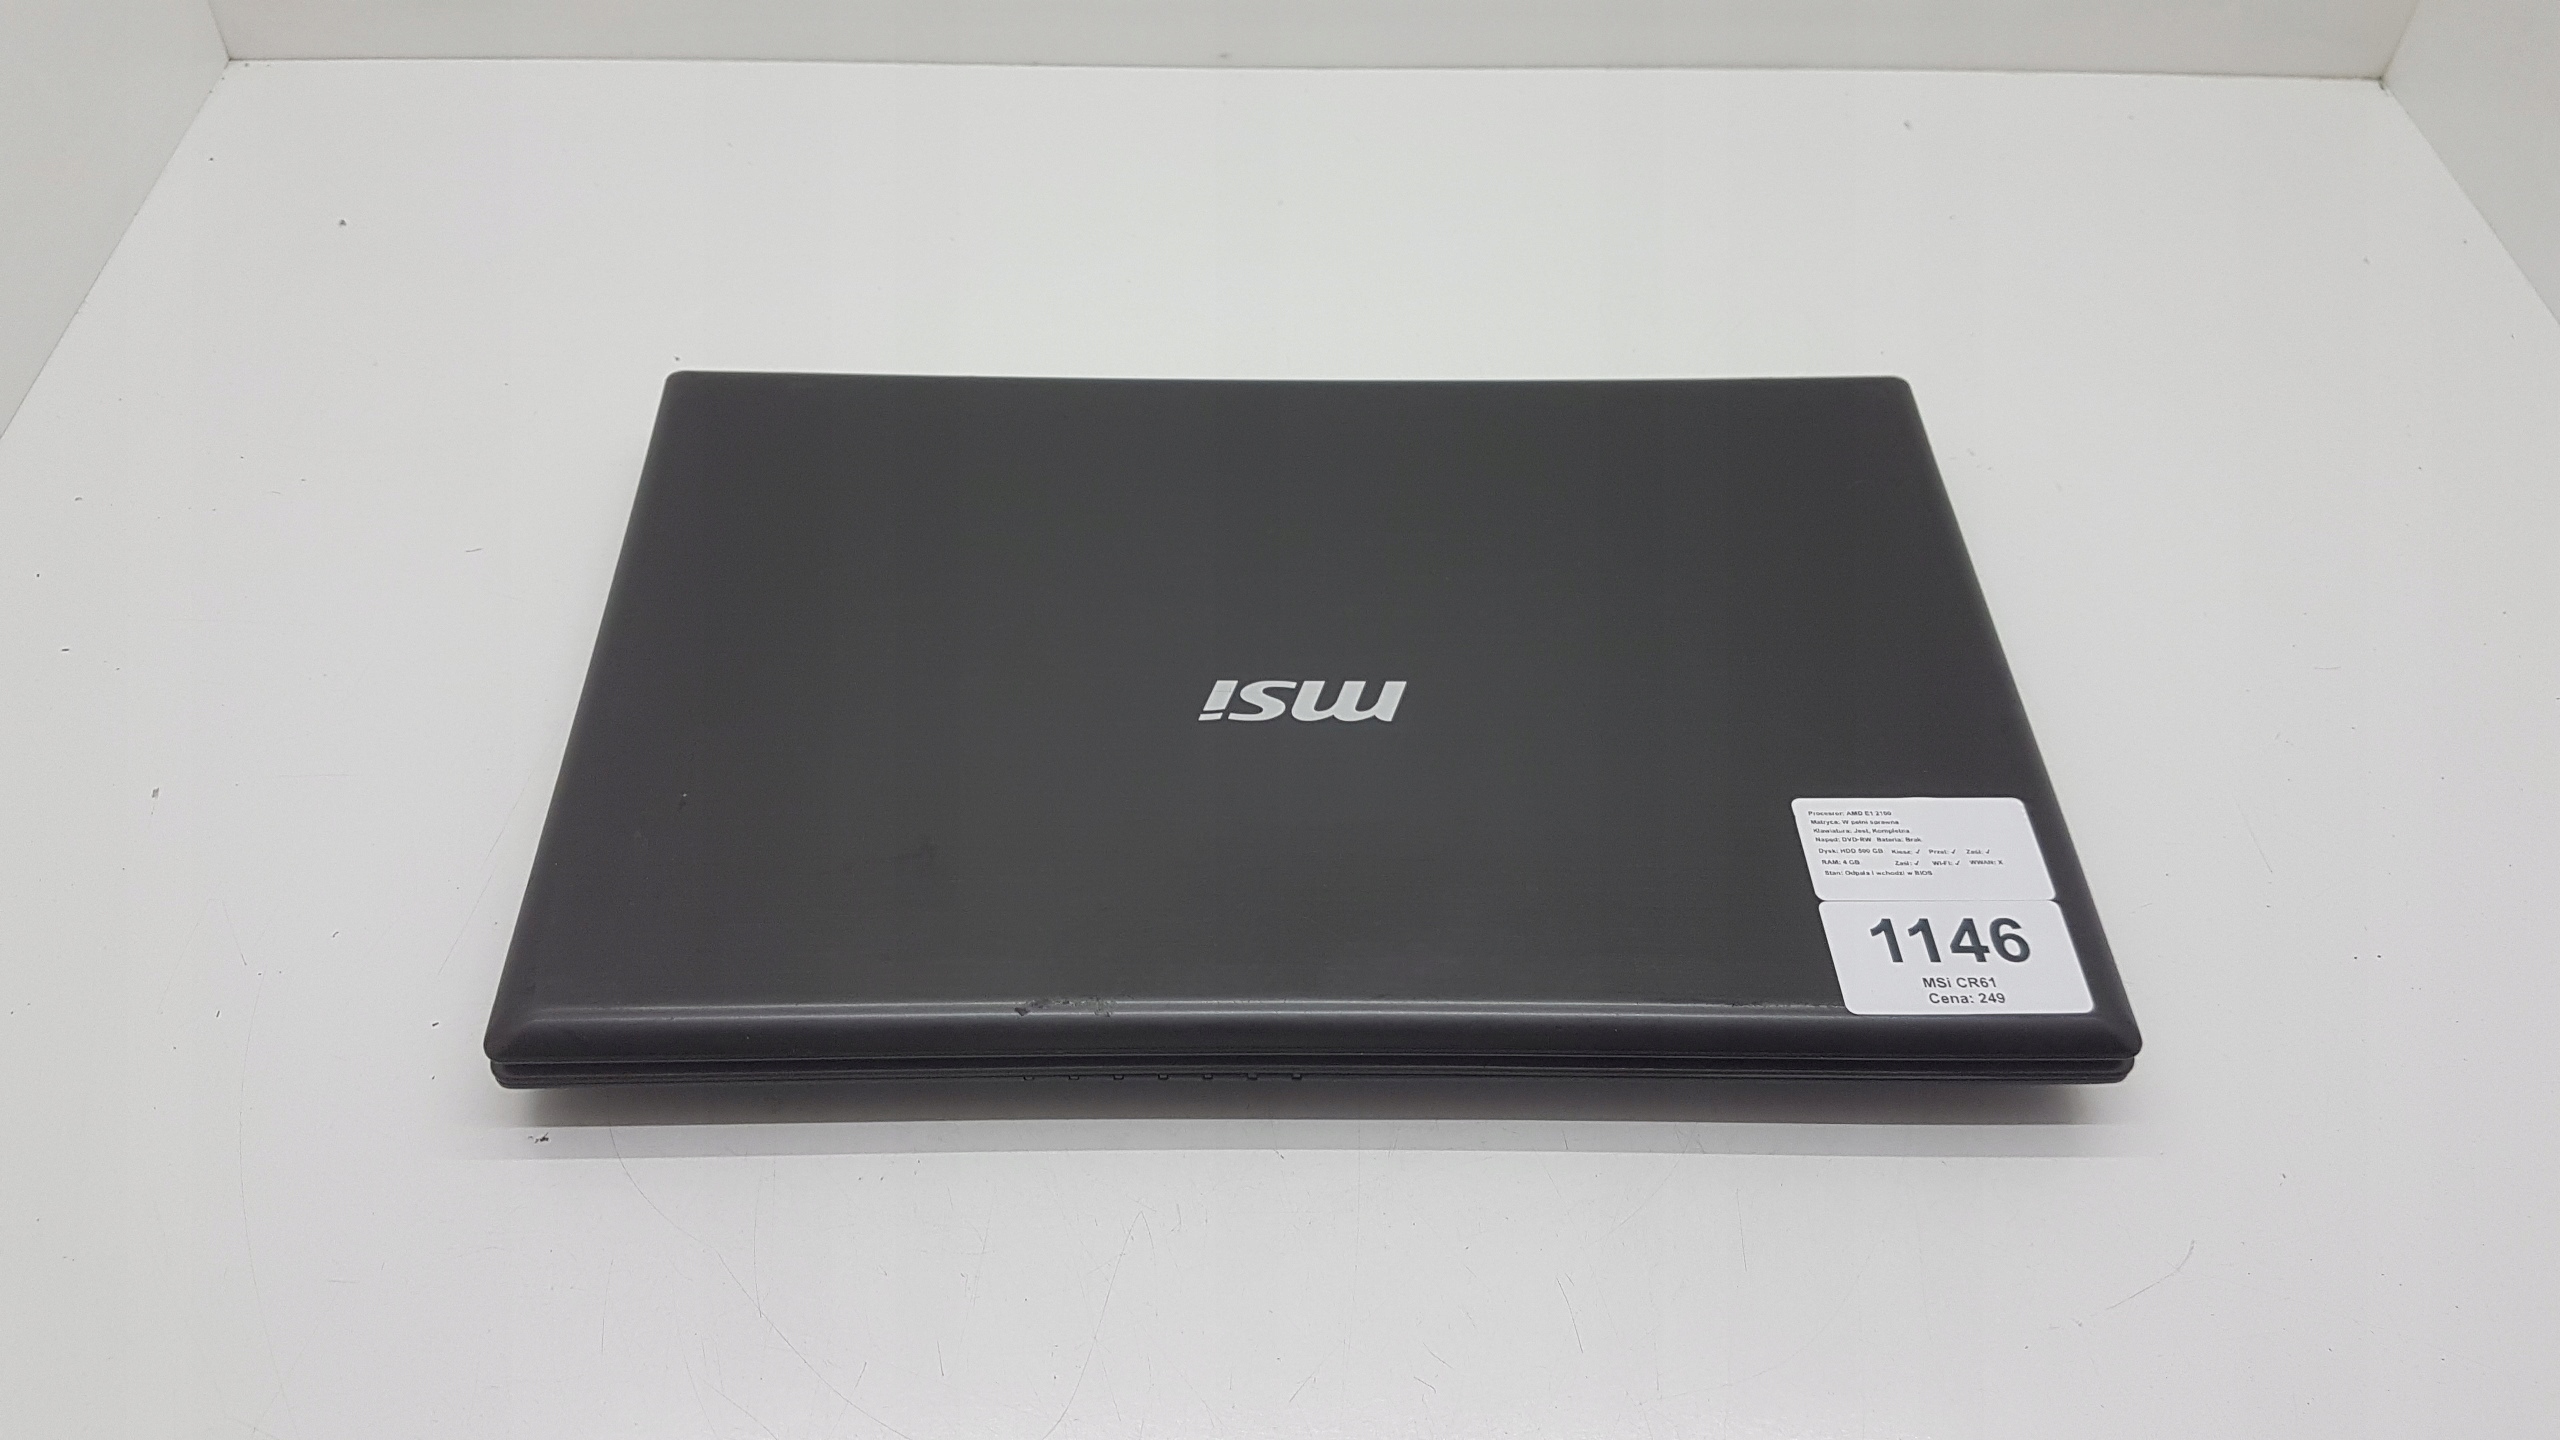 Notebook MSi CR61 (1146)